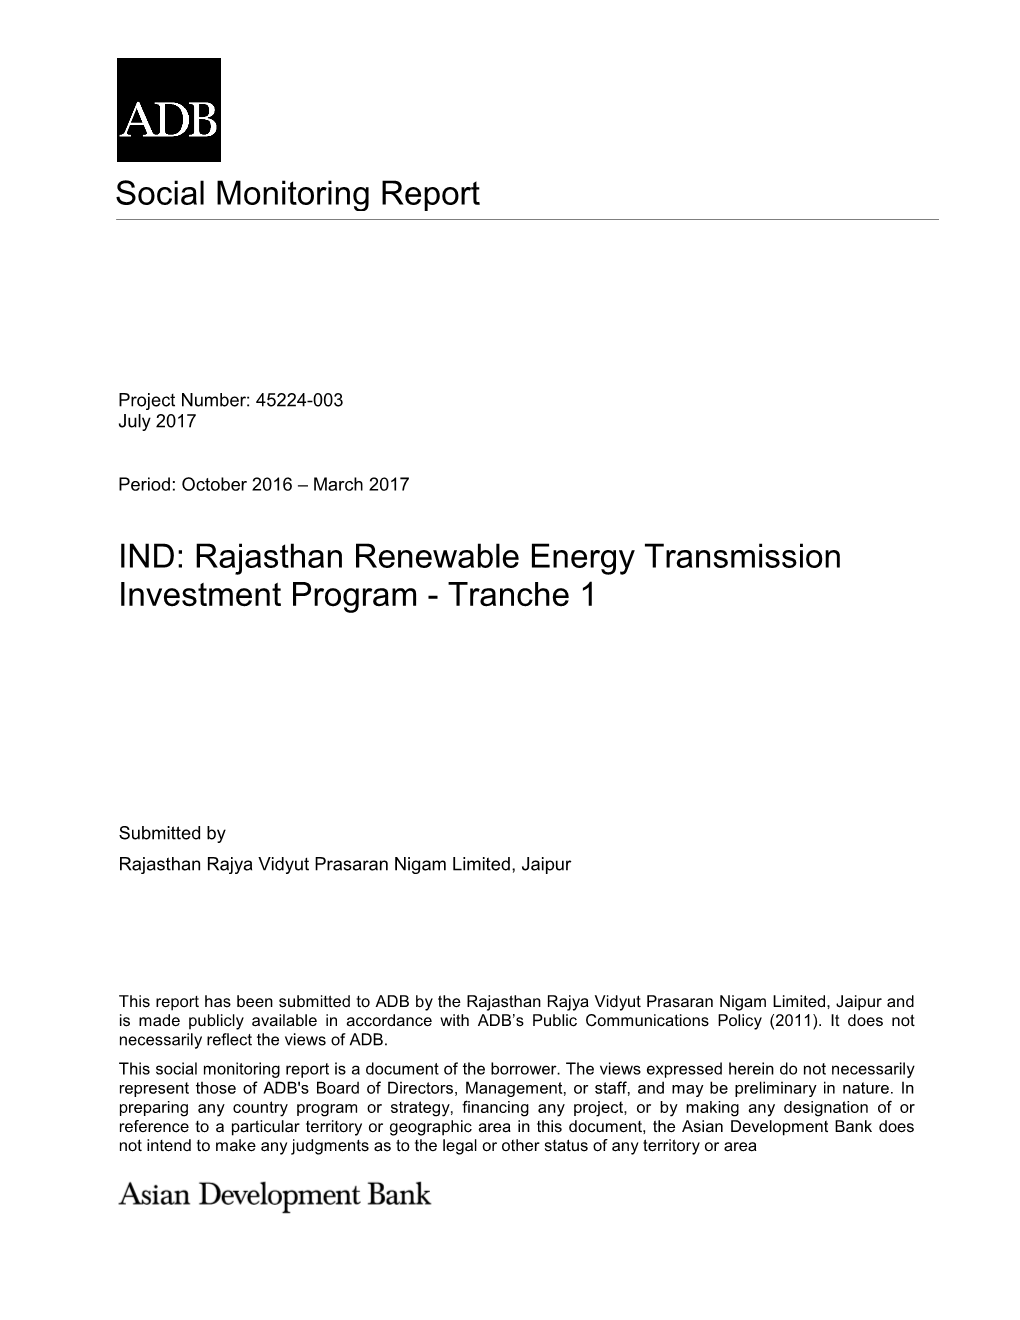 Rajasthan Renewable Energy Transmission Investment Program - Tranche 1